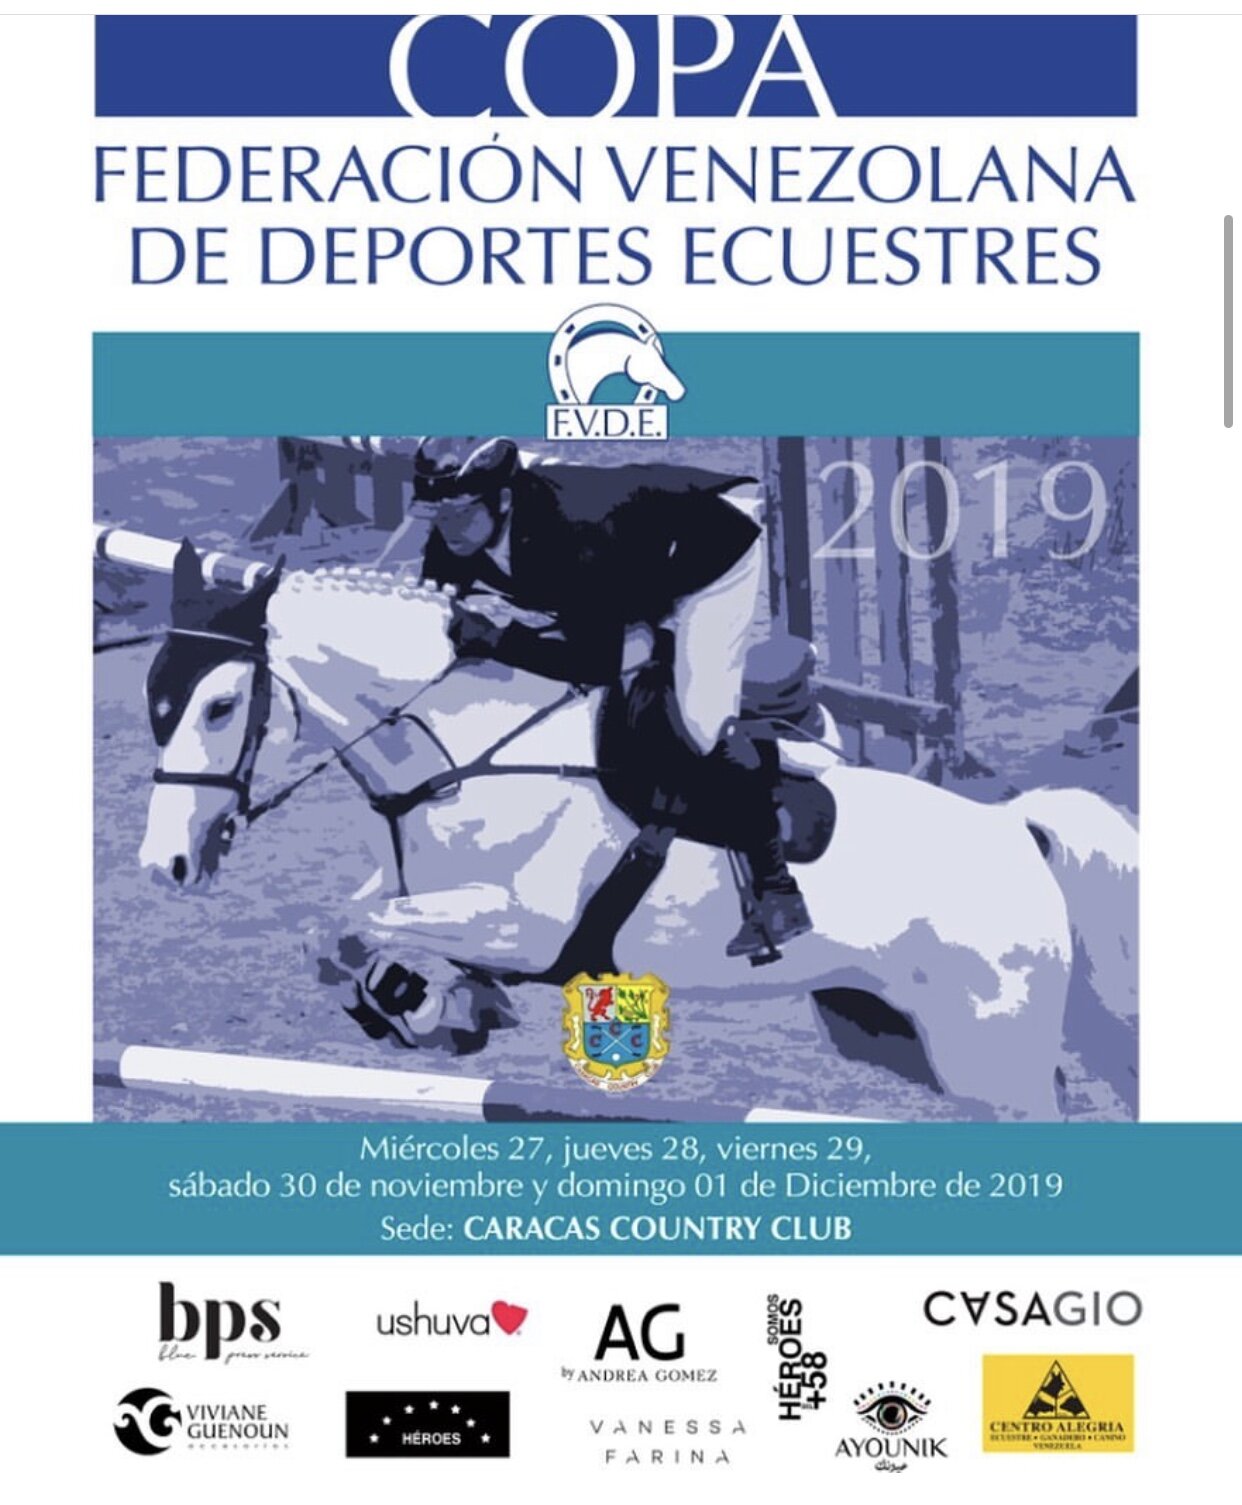 AYOUNIK SPONSOR OF THIS HORSEBACK RIDING CUP, NOVEMBER 2019, CARACAS VENEZUELA